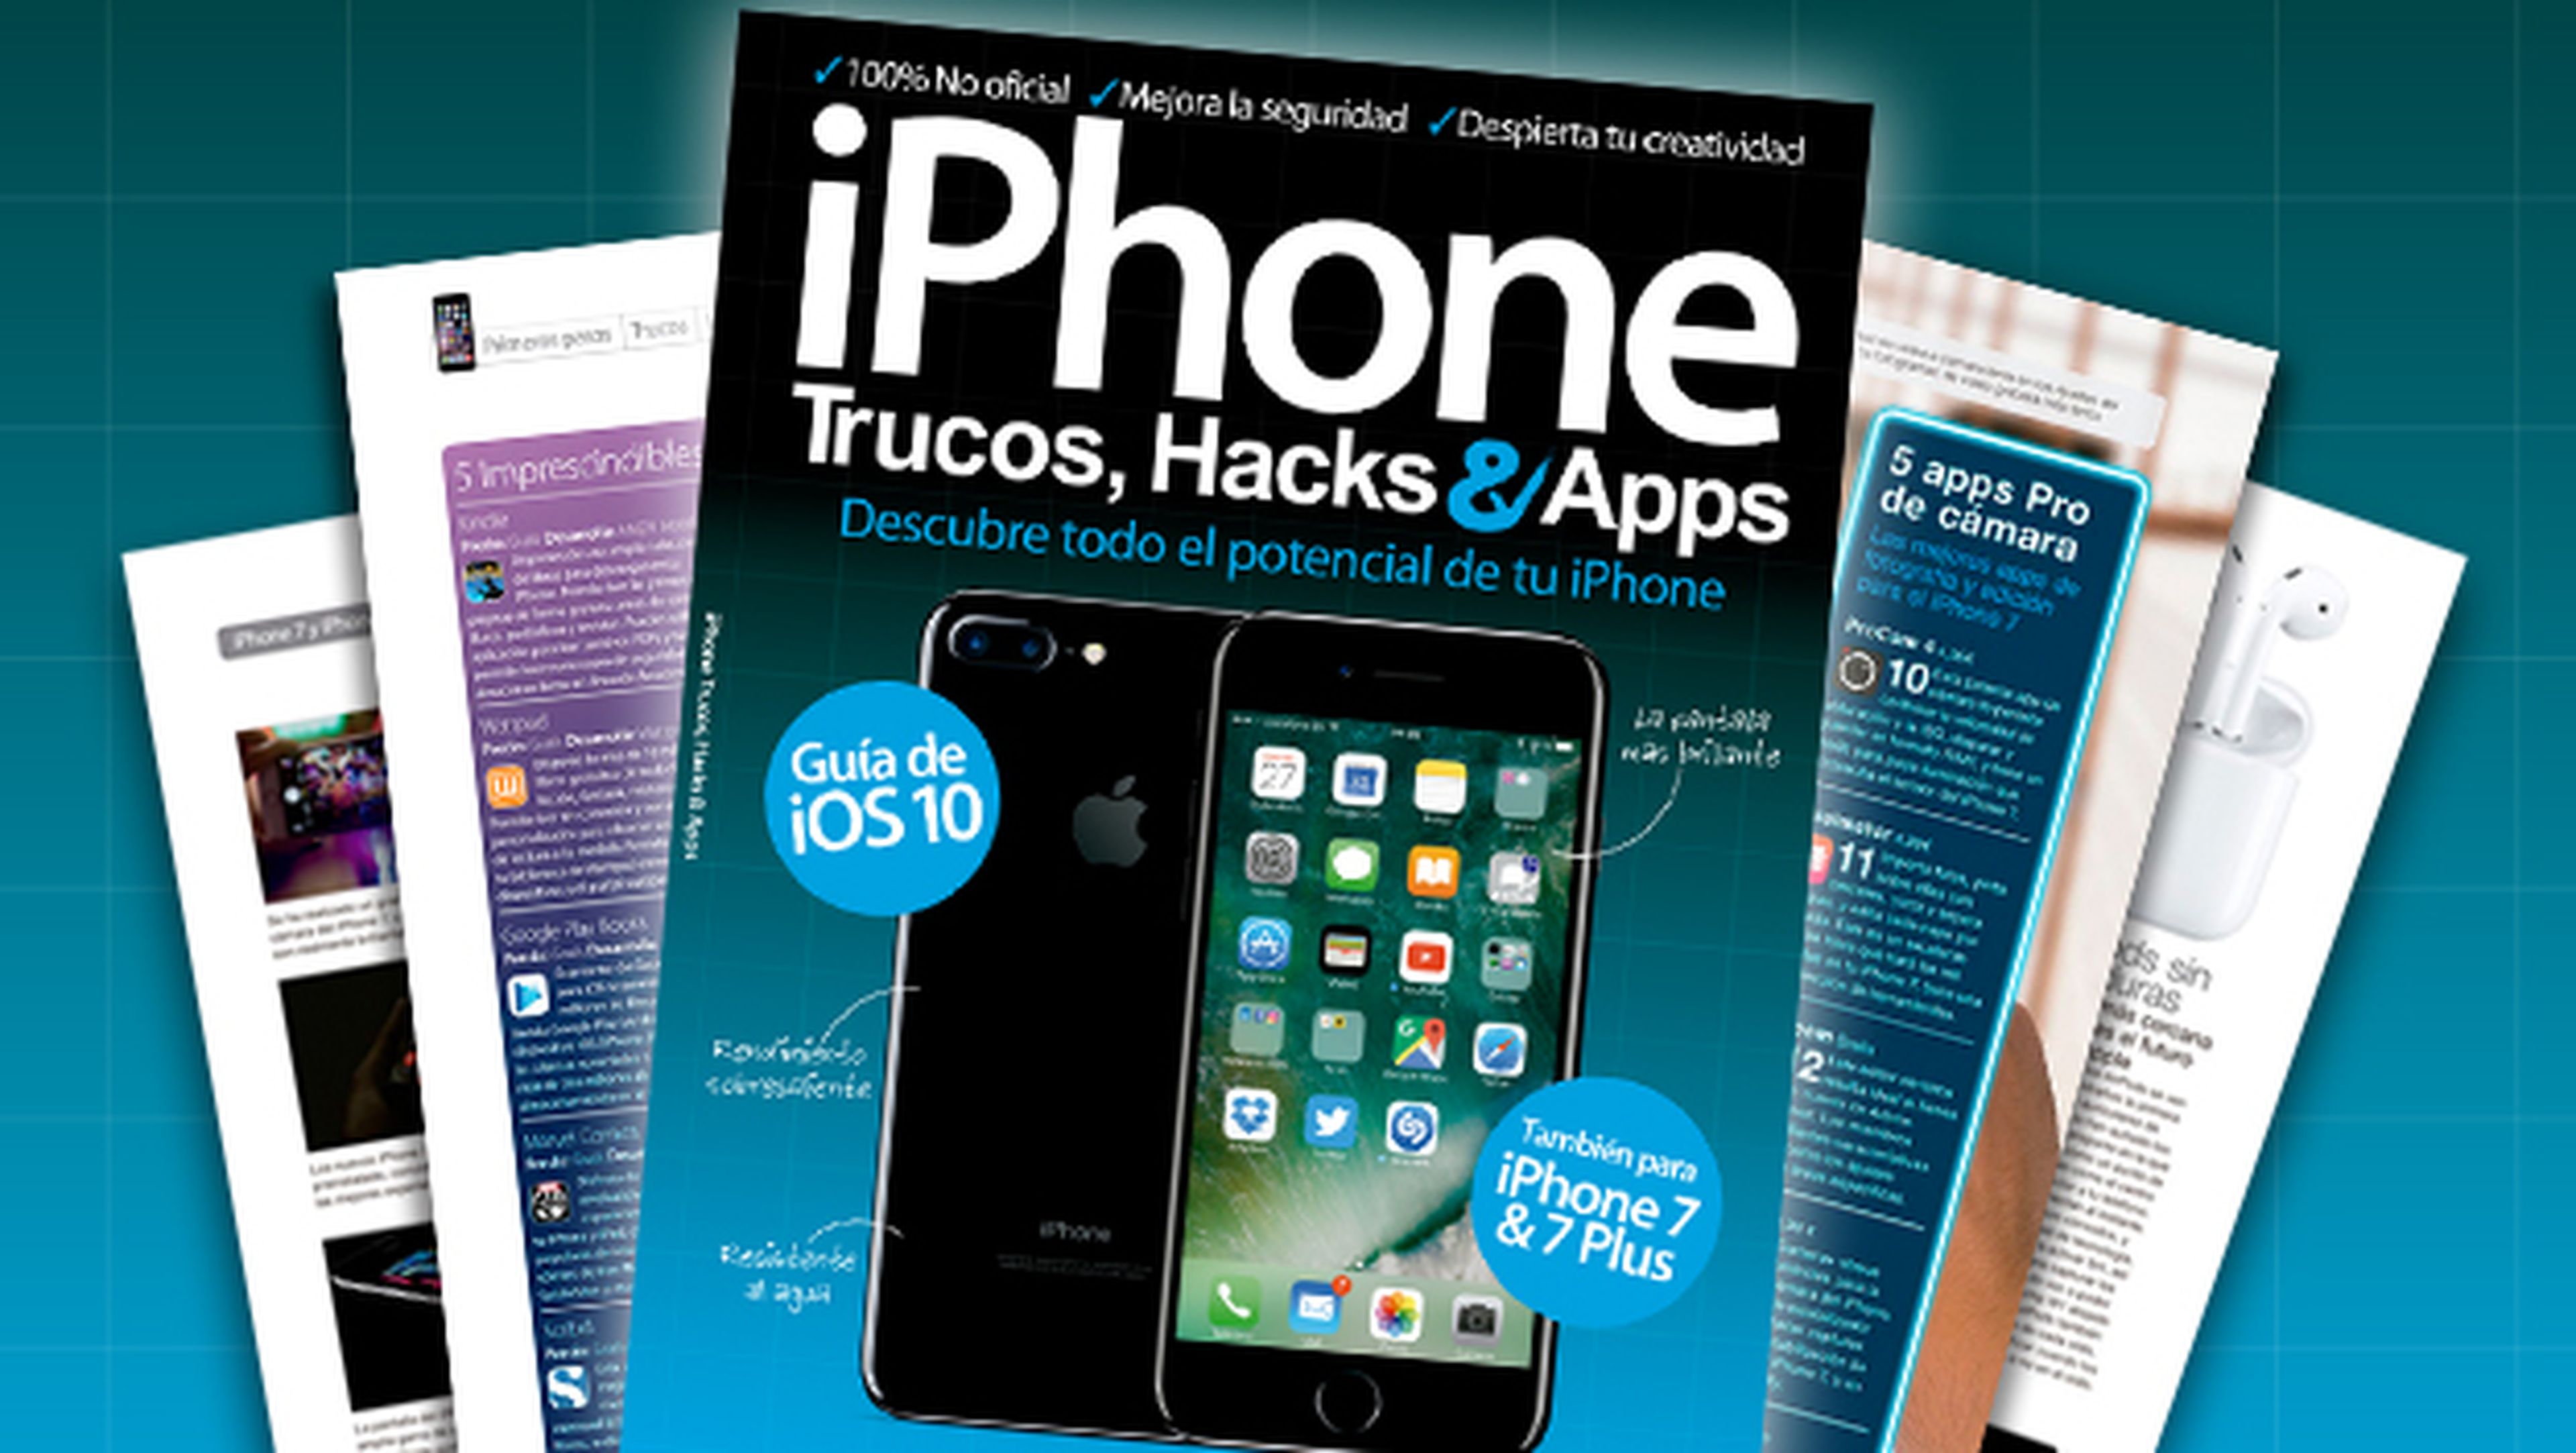 iPhone Trucos, Hacks & Apps